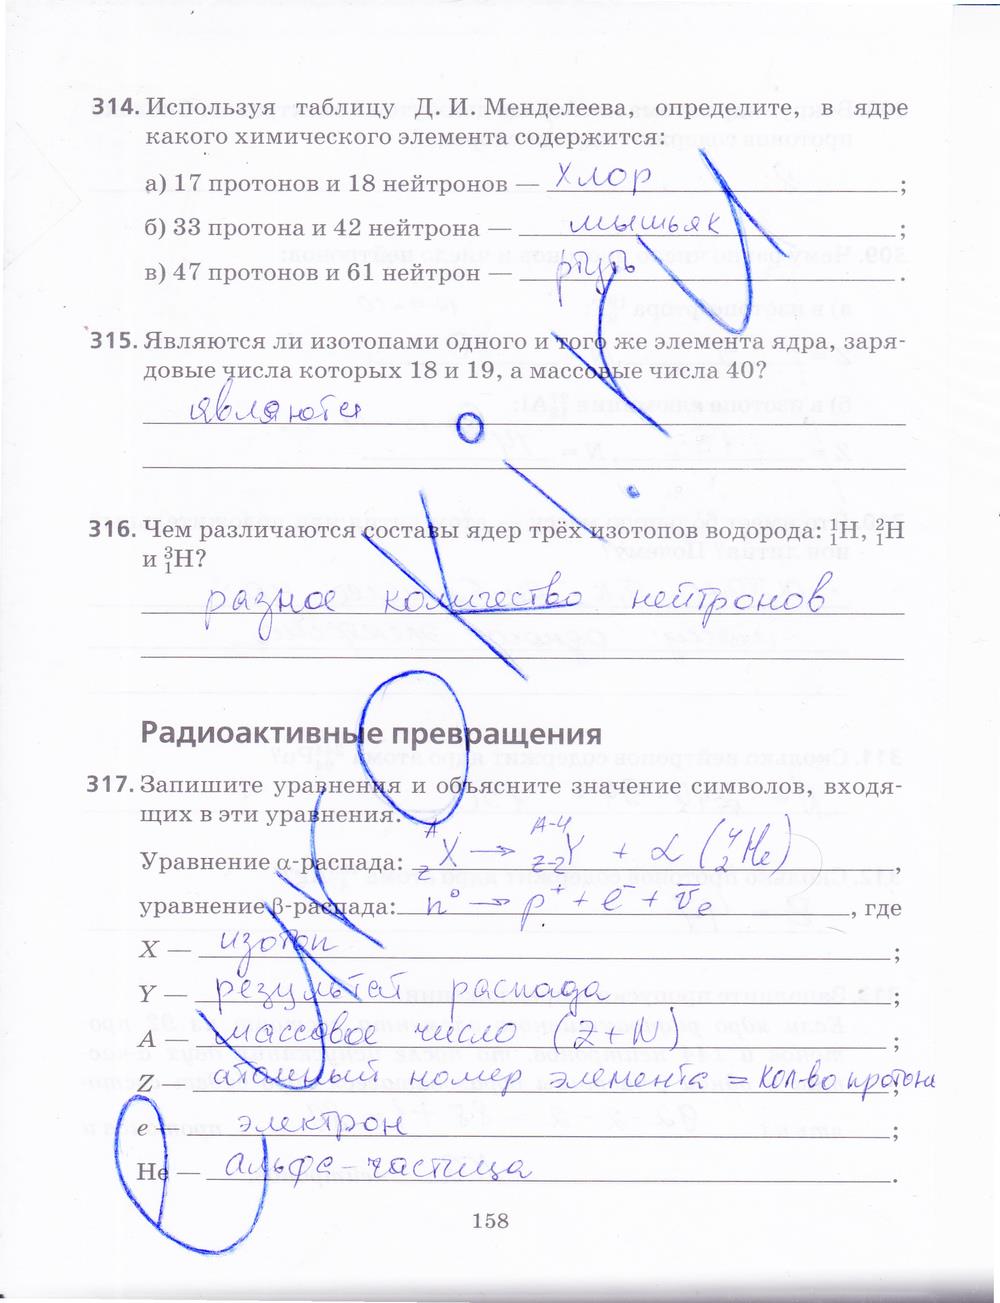 гдз 9 класс рабочая тетрадь страница 158 физика Пурышева, Важеевская, Чаругин